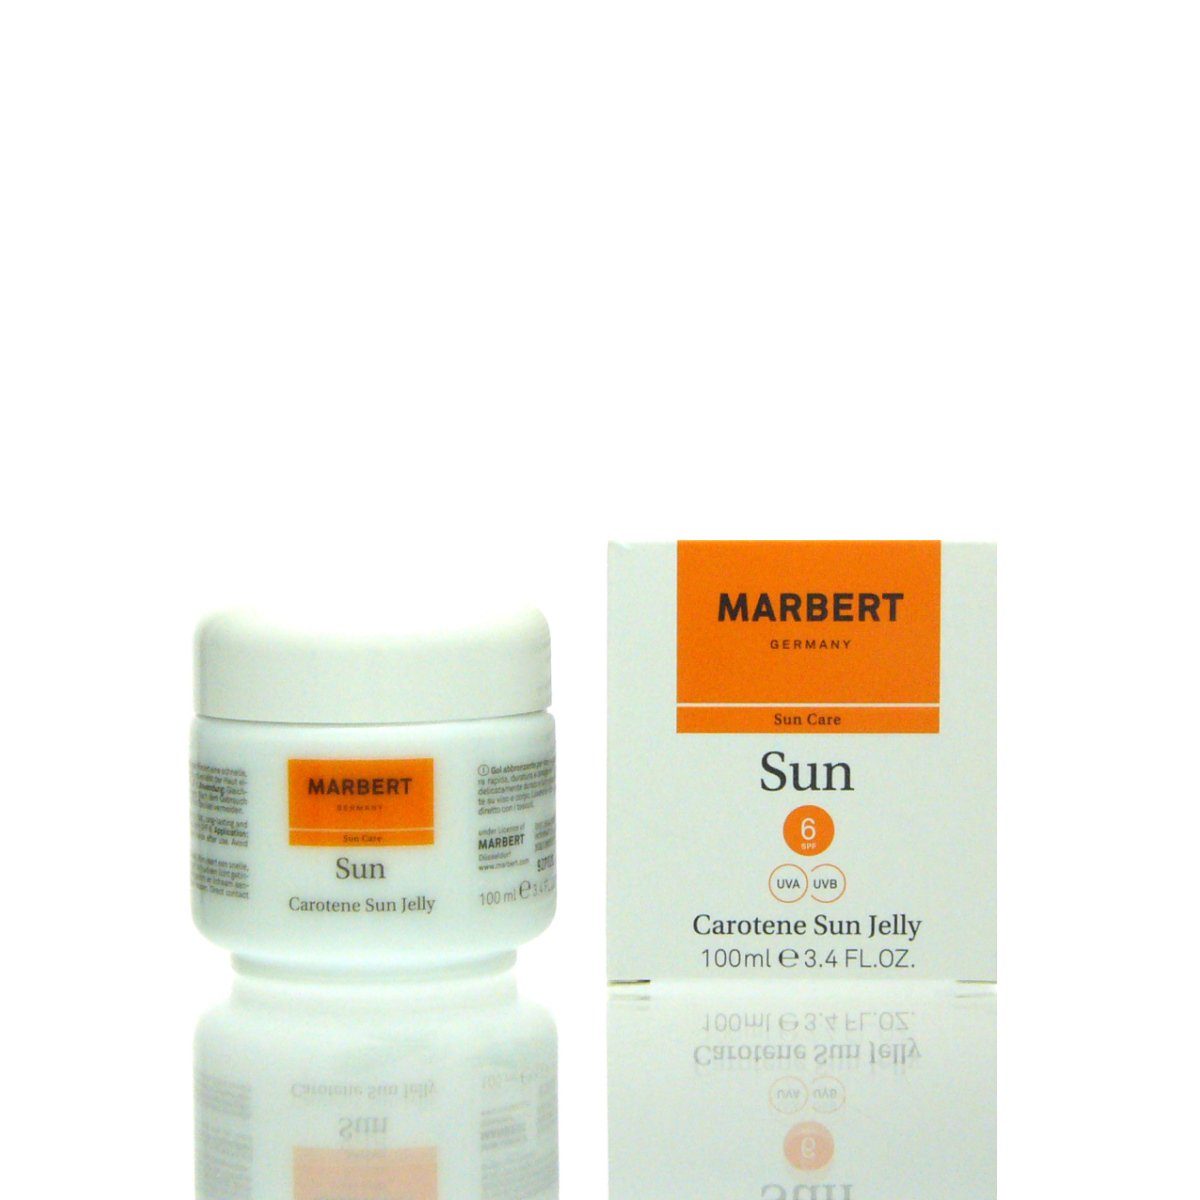 [Billiger Verkauf beginnt] Marbert Make-up SPF 6 Marbert 100 Carotene Sun Jelly ml Sun